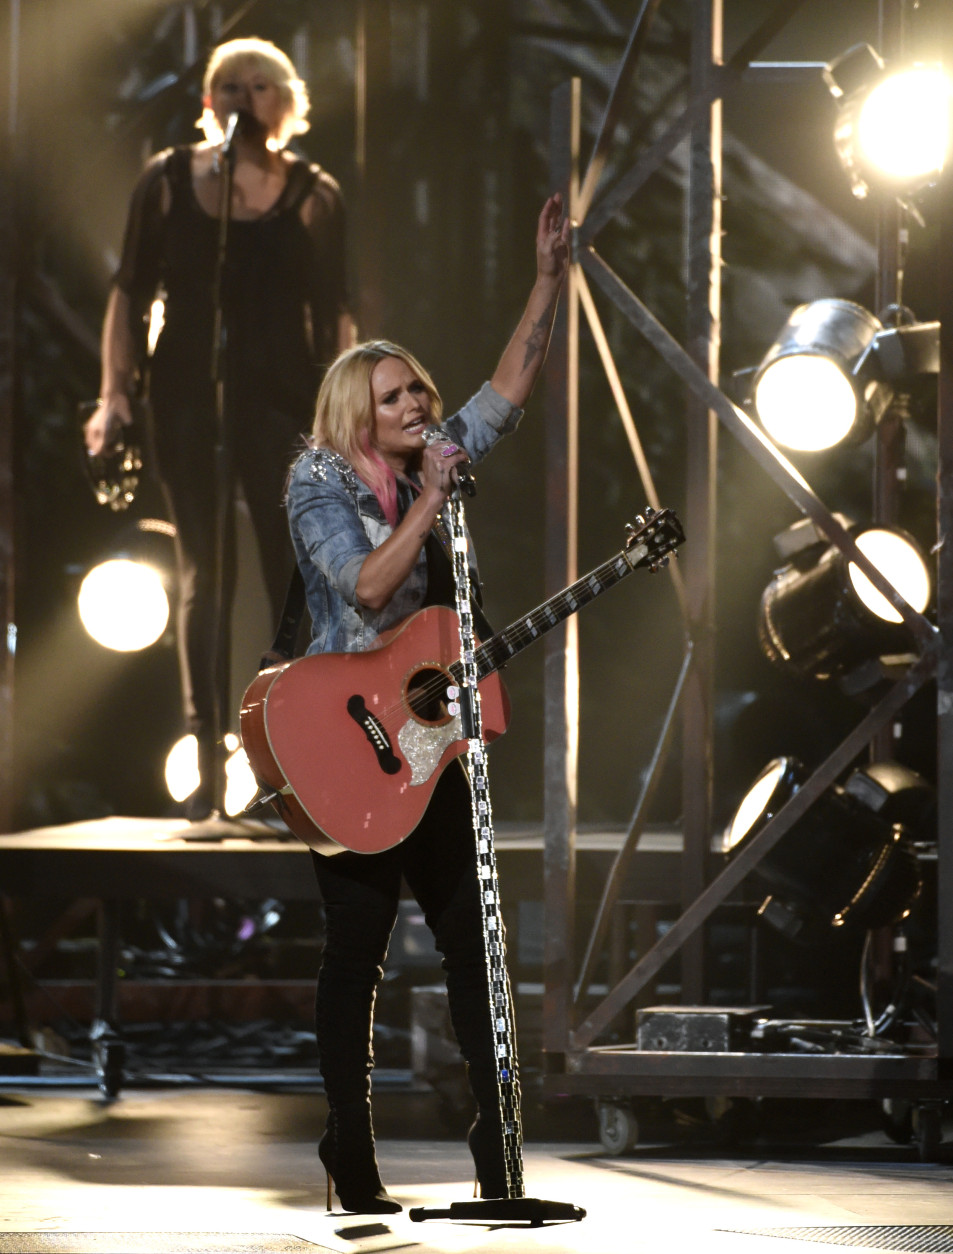 Miranda Lambert performs at the 49th annual CMA Awards at the Bridgestone Arena on Wednesday, Nov. 4, 2015, in Nashville, Tenn. (Photo by Chris Pizzello/Invision/AP)